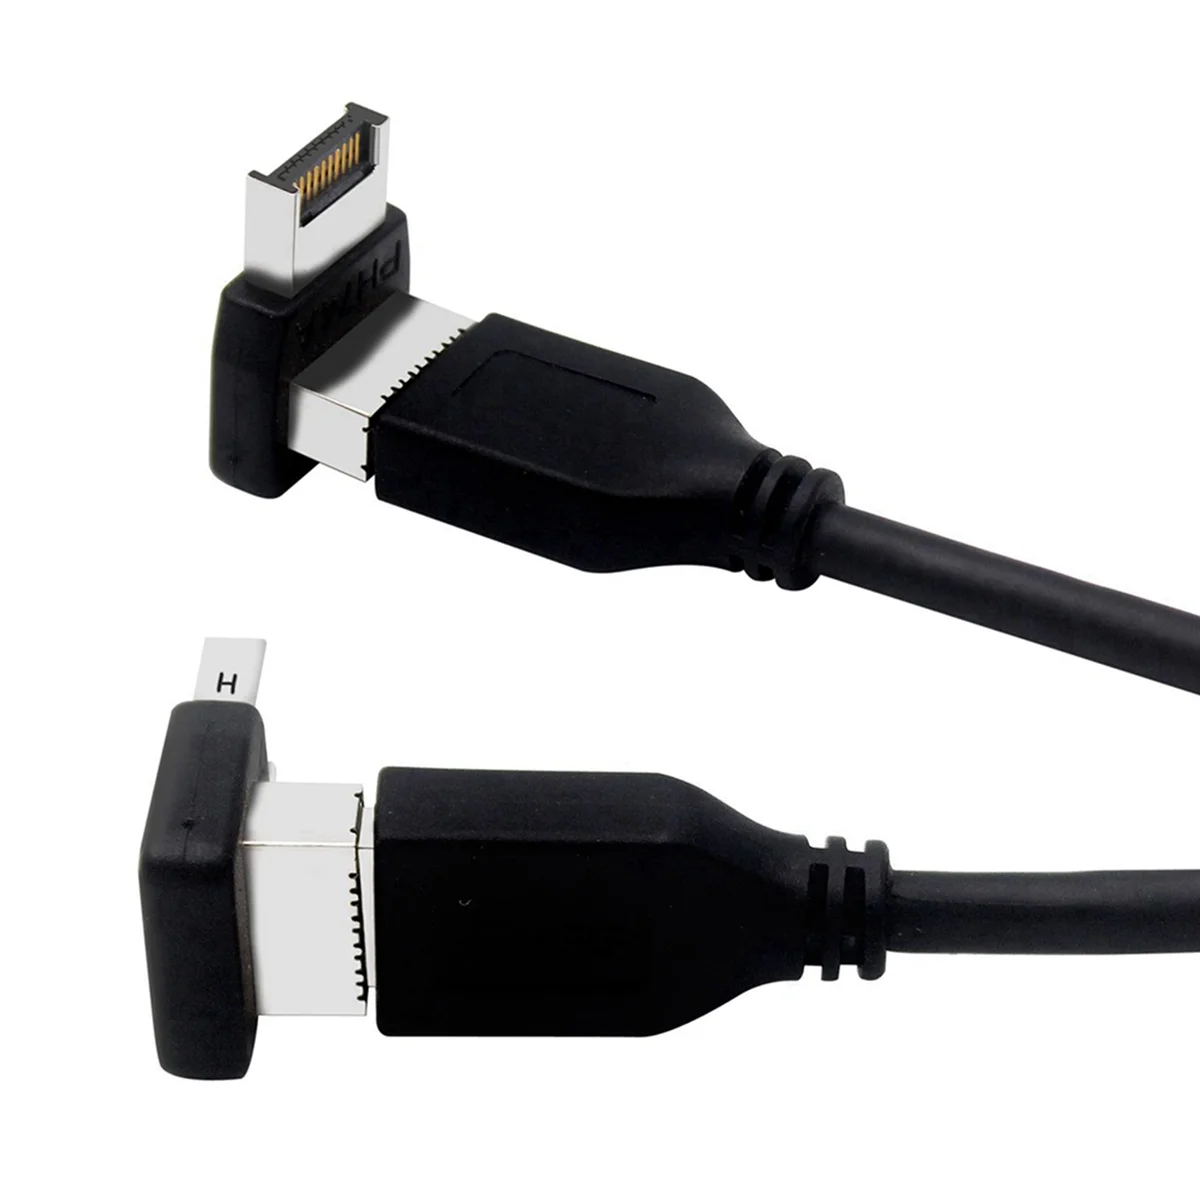 

2X компьютерная материнская плата Type-E USB 3.1 интерфейс Type-E 90 градусов устанавливаемый Адаптер рулевого угла переднего типа C (PH74B)